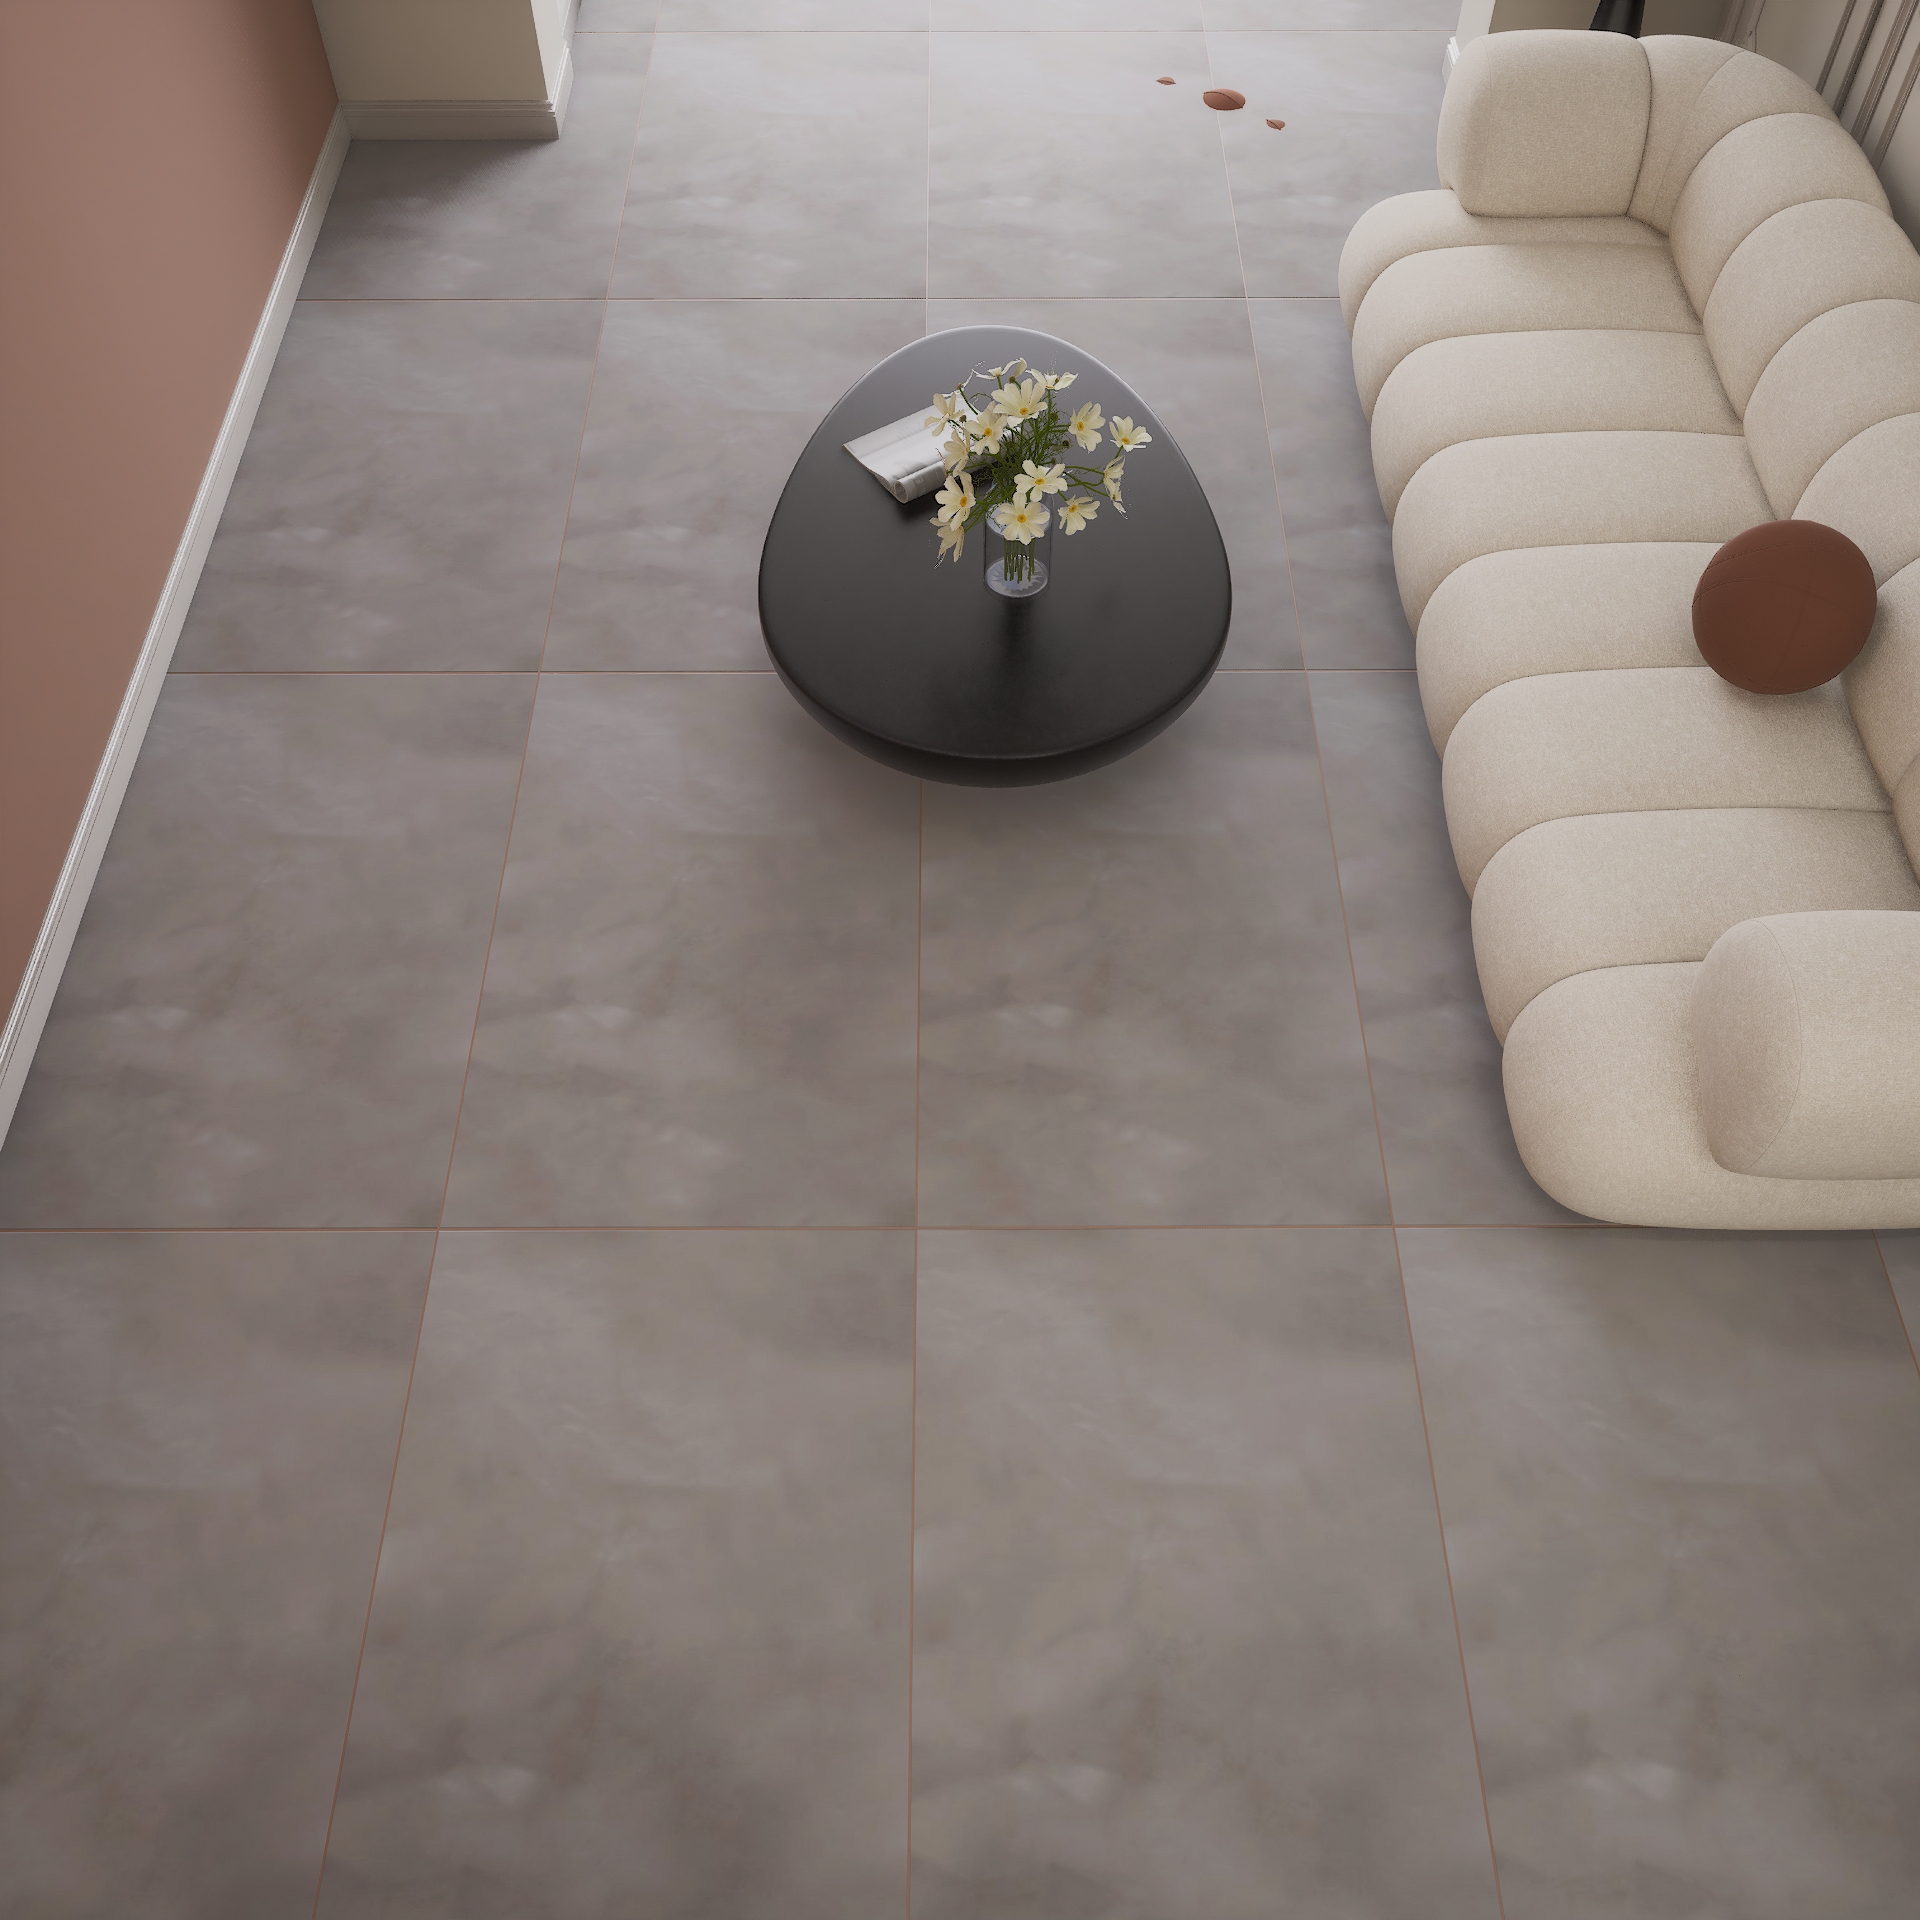 600 X 1200 mm Stonella Brown Glazed Vitrified Floor Tile - Glossy Finish -  Flooring, Vitrified Floor Tiles - Buy 600 X 1200 mm Stonella Brown Glazed  Vitrified Floor Tile - Glossy